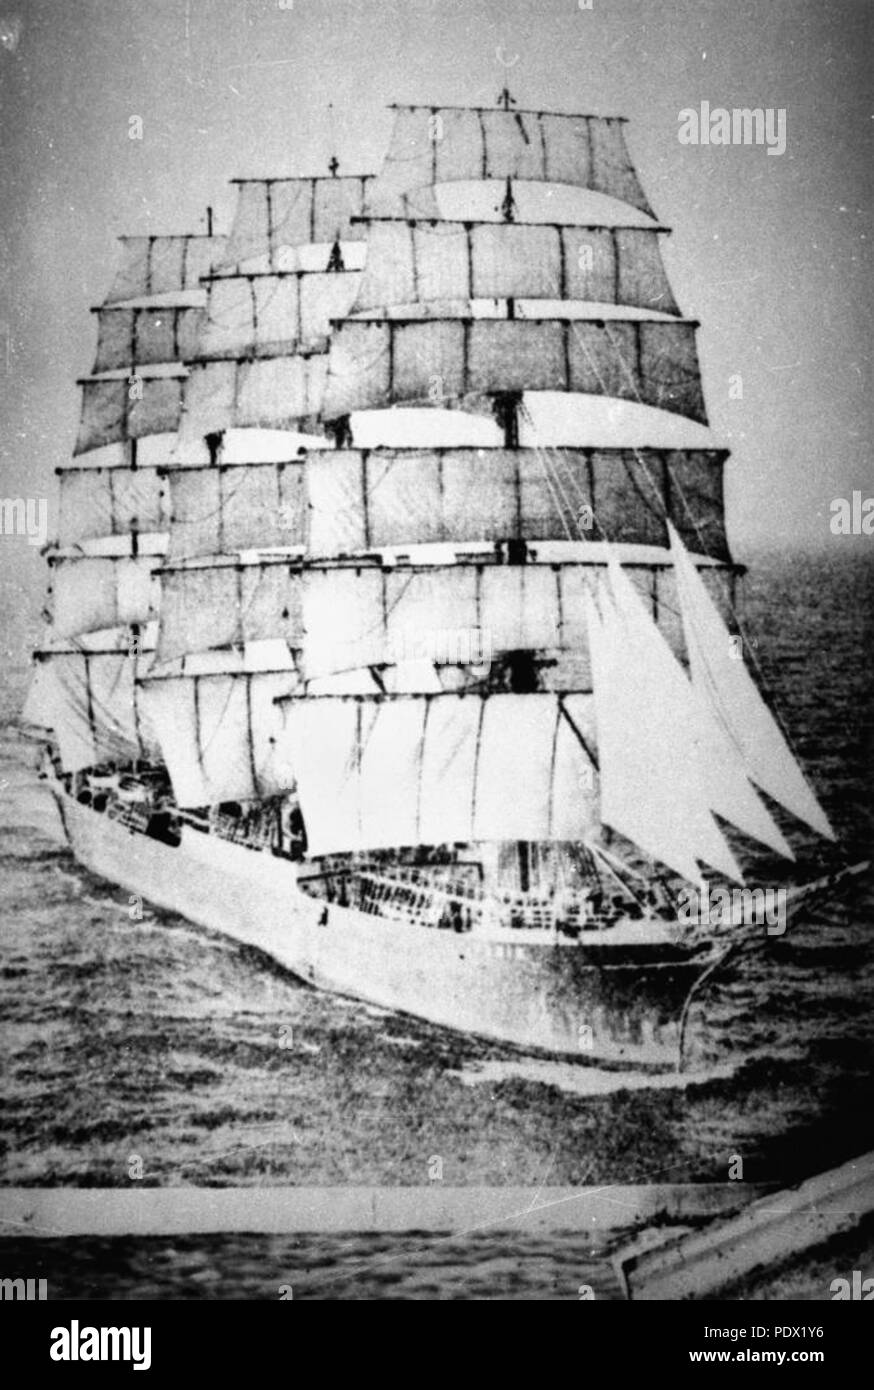 241 StateLibQld 1 171539 Pamir (ship) Stock Photo